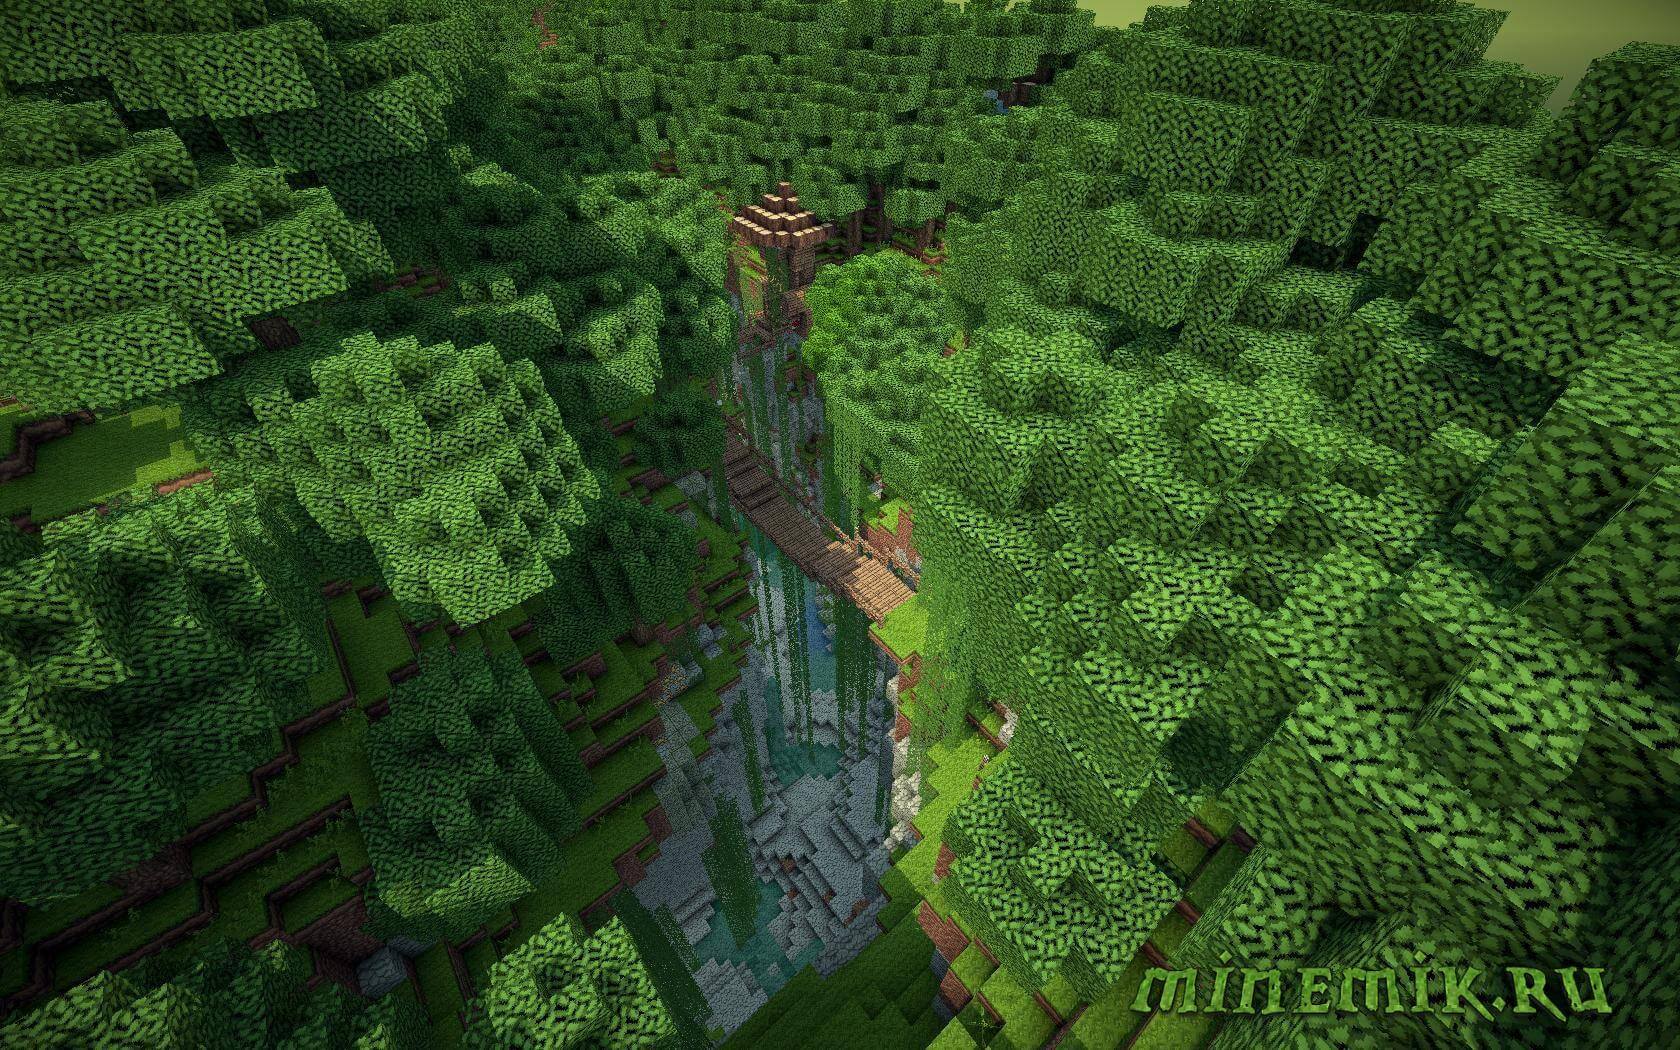 Minecraft jungles. Биом джунгли в майнкрафт. Боим джунгли майнкрафт. Карта джунгли майнкрафт. Тропический лес майнкрафт.